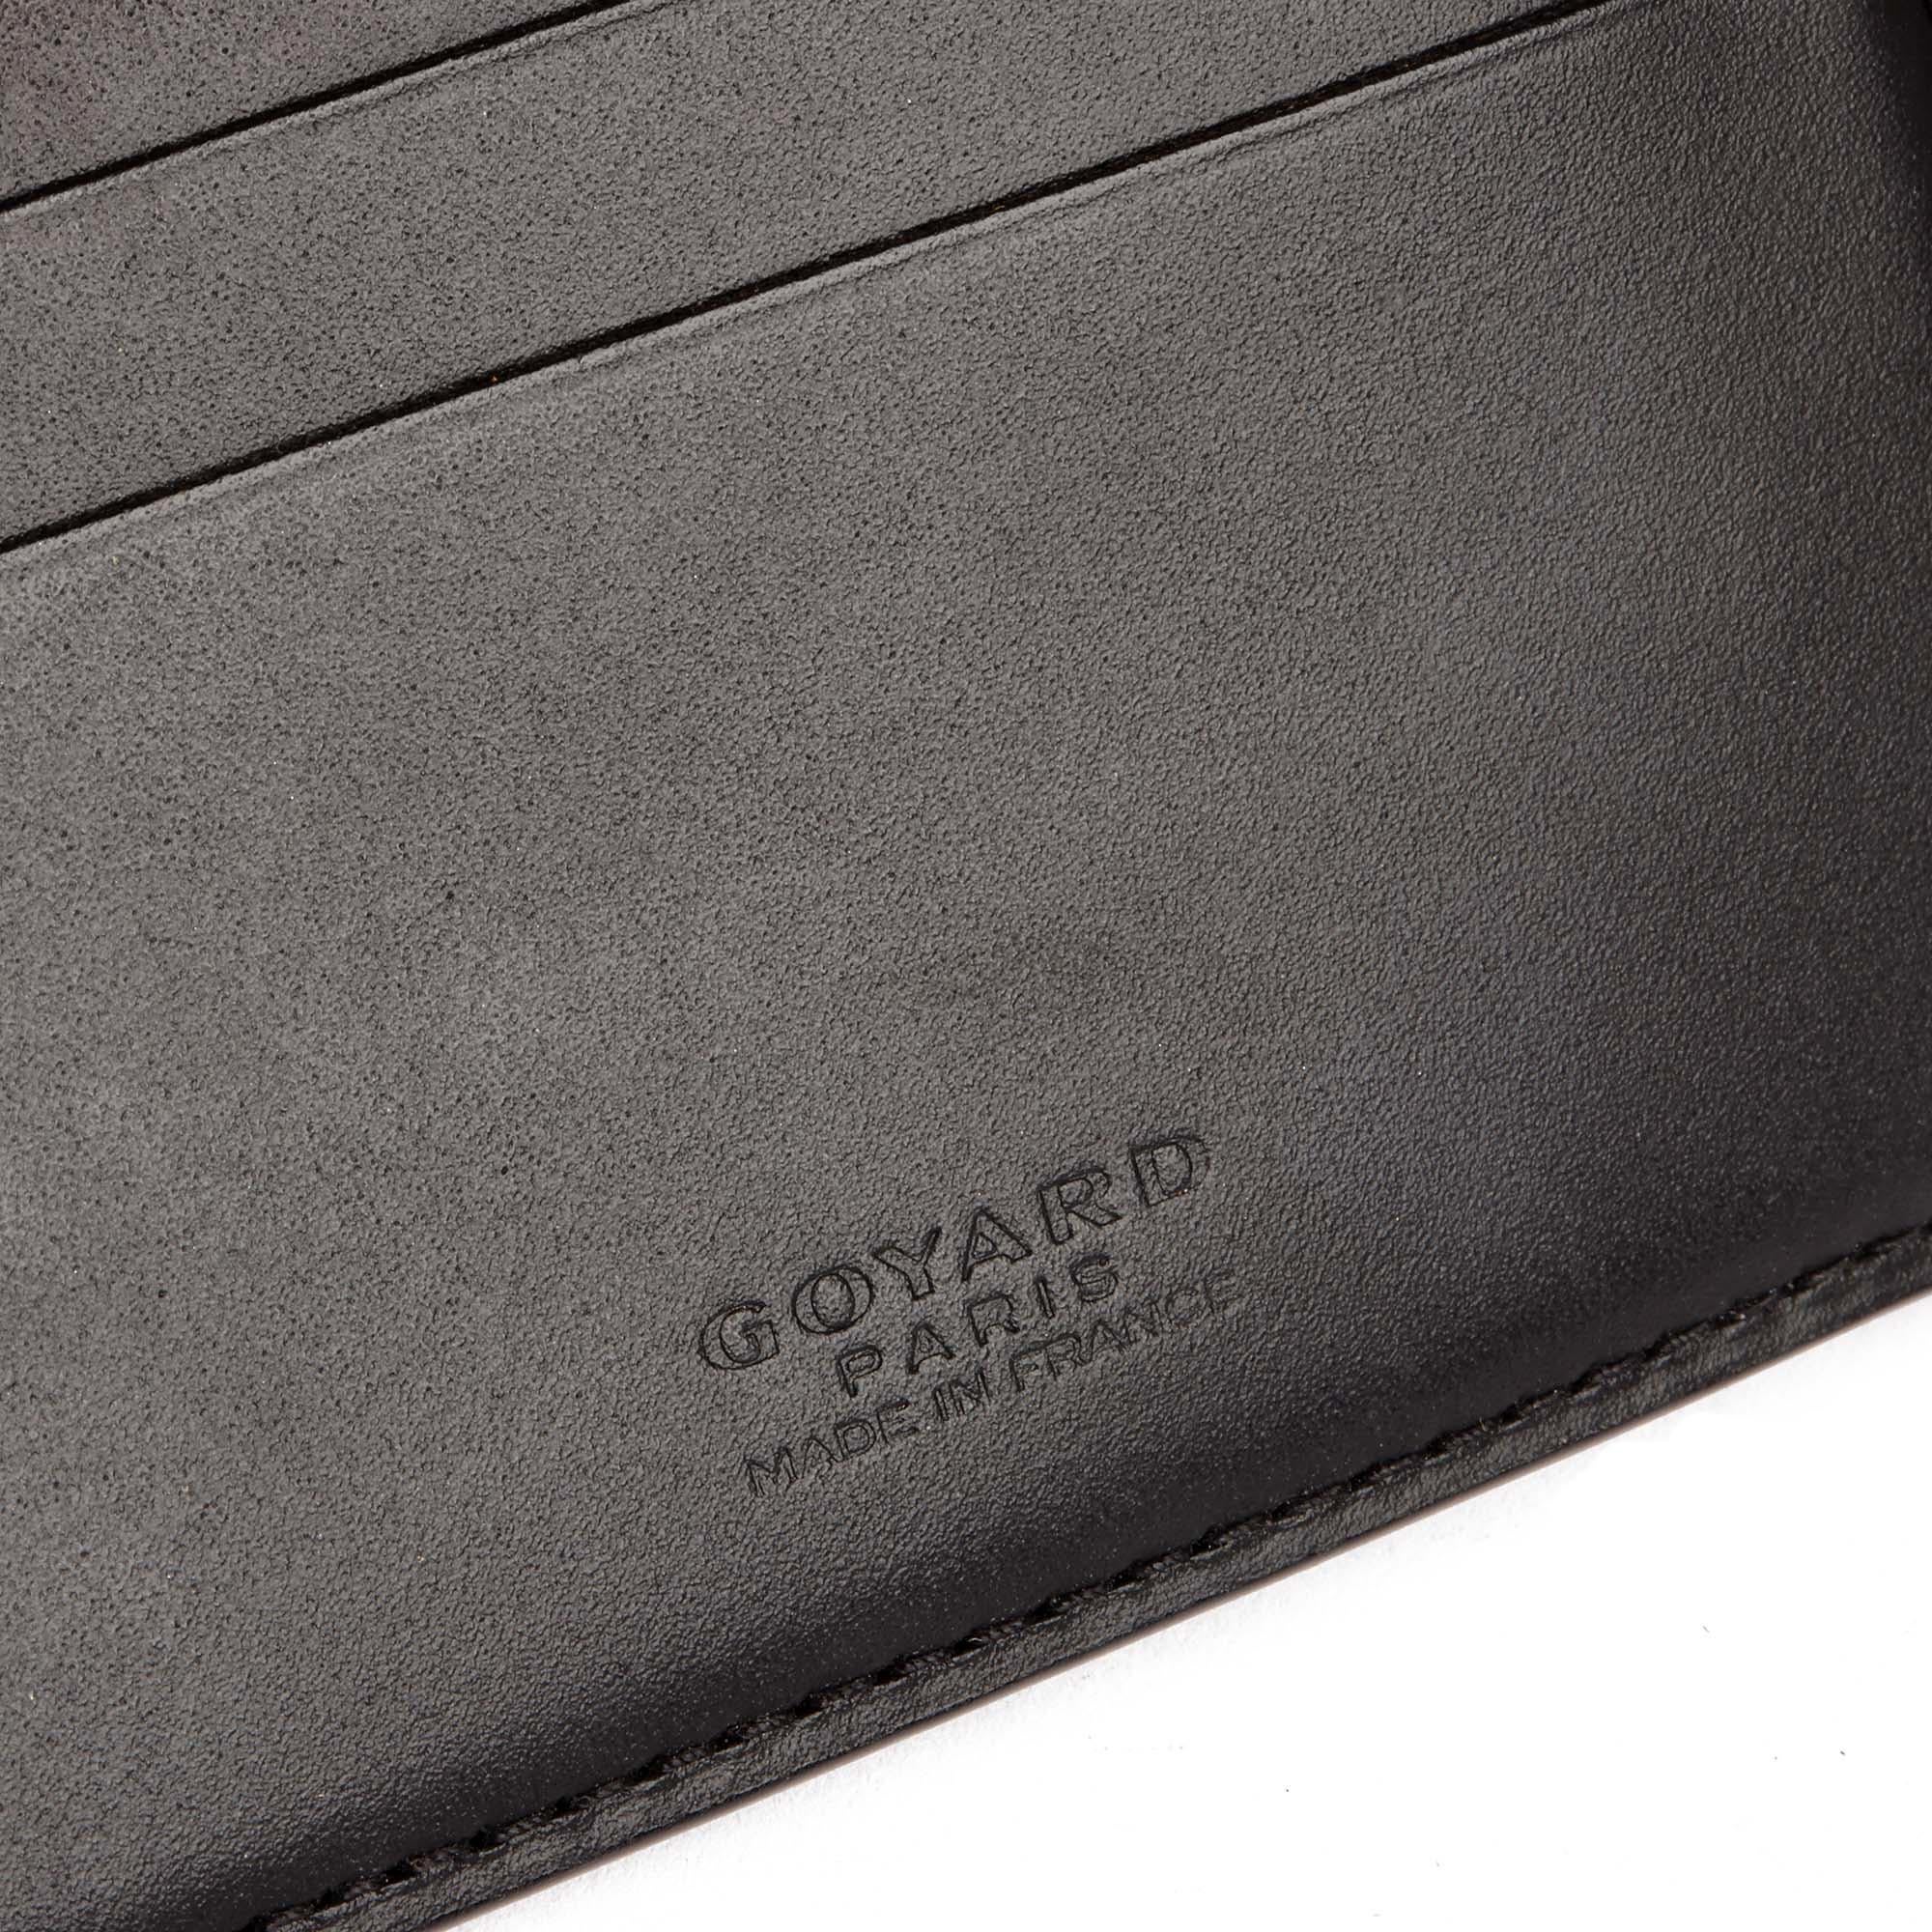 Goyard Wallet Victoire - For Sale on 1stDibs